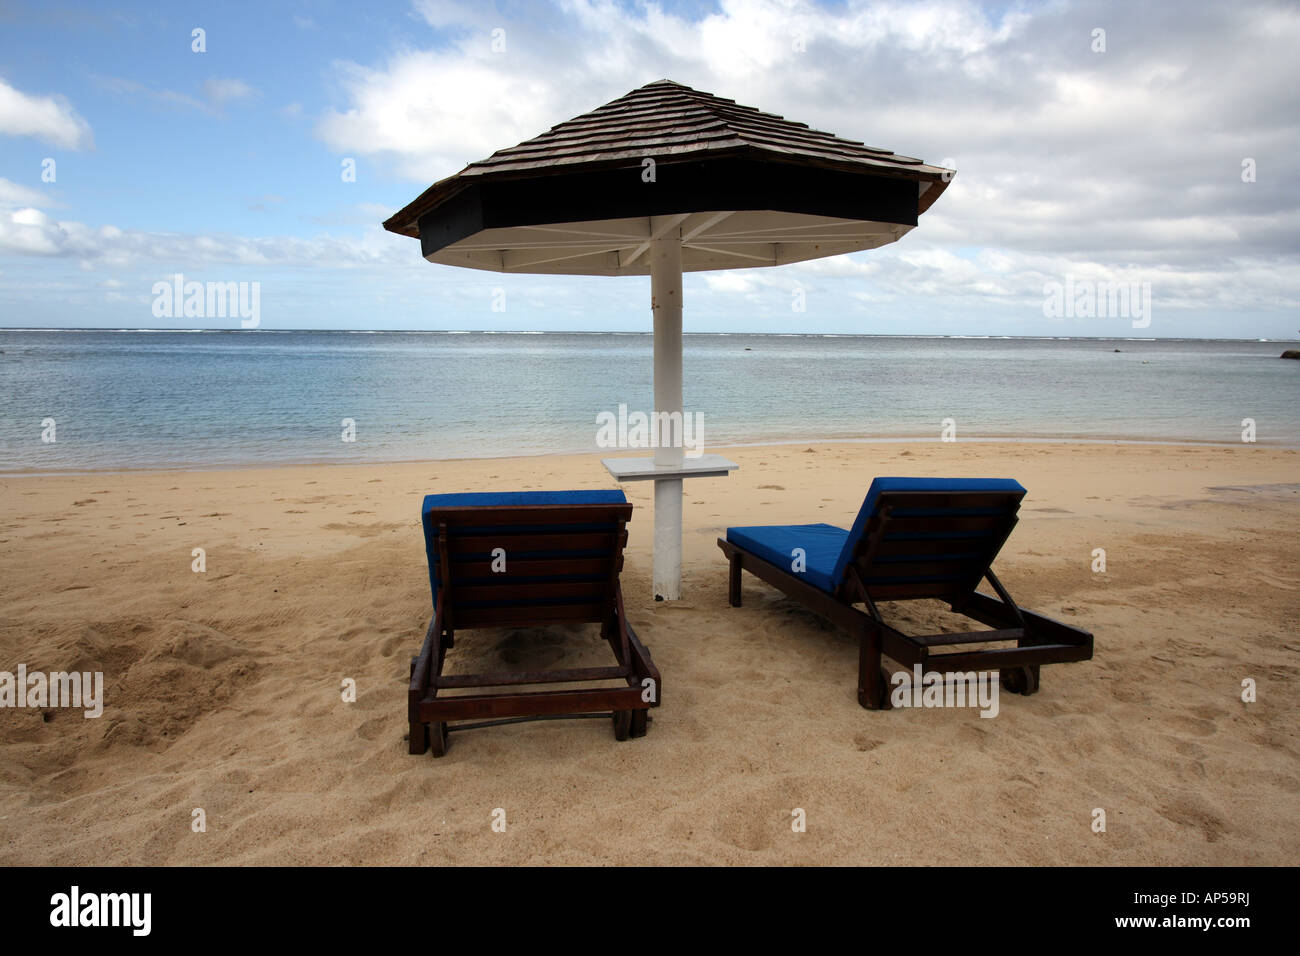 BURE AND DECK CHAIRS ON BEACH FIJIAN ISLAND RESORT HORIZONTAL BDB11383 Stock Photo